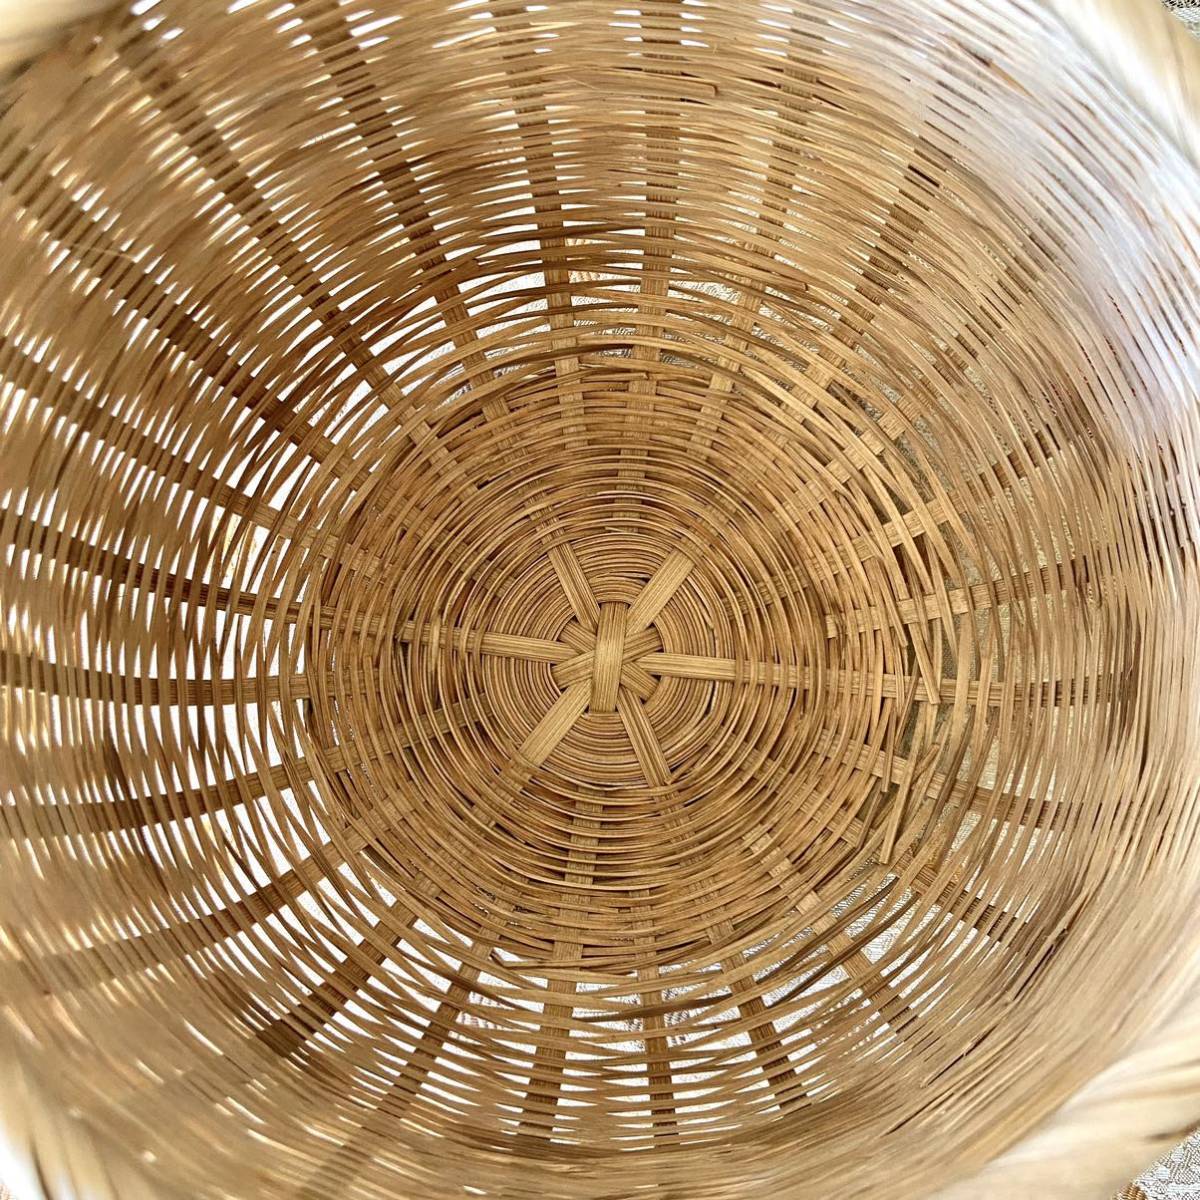 Sugri basket bag basket bag bamboo. is na basket large butterfly chou butterfly ......